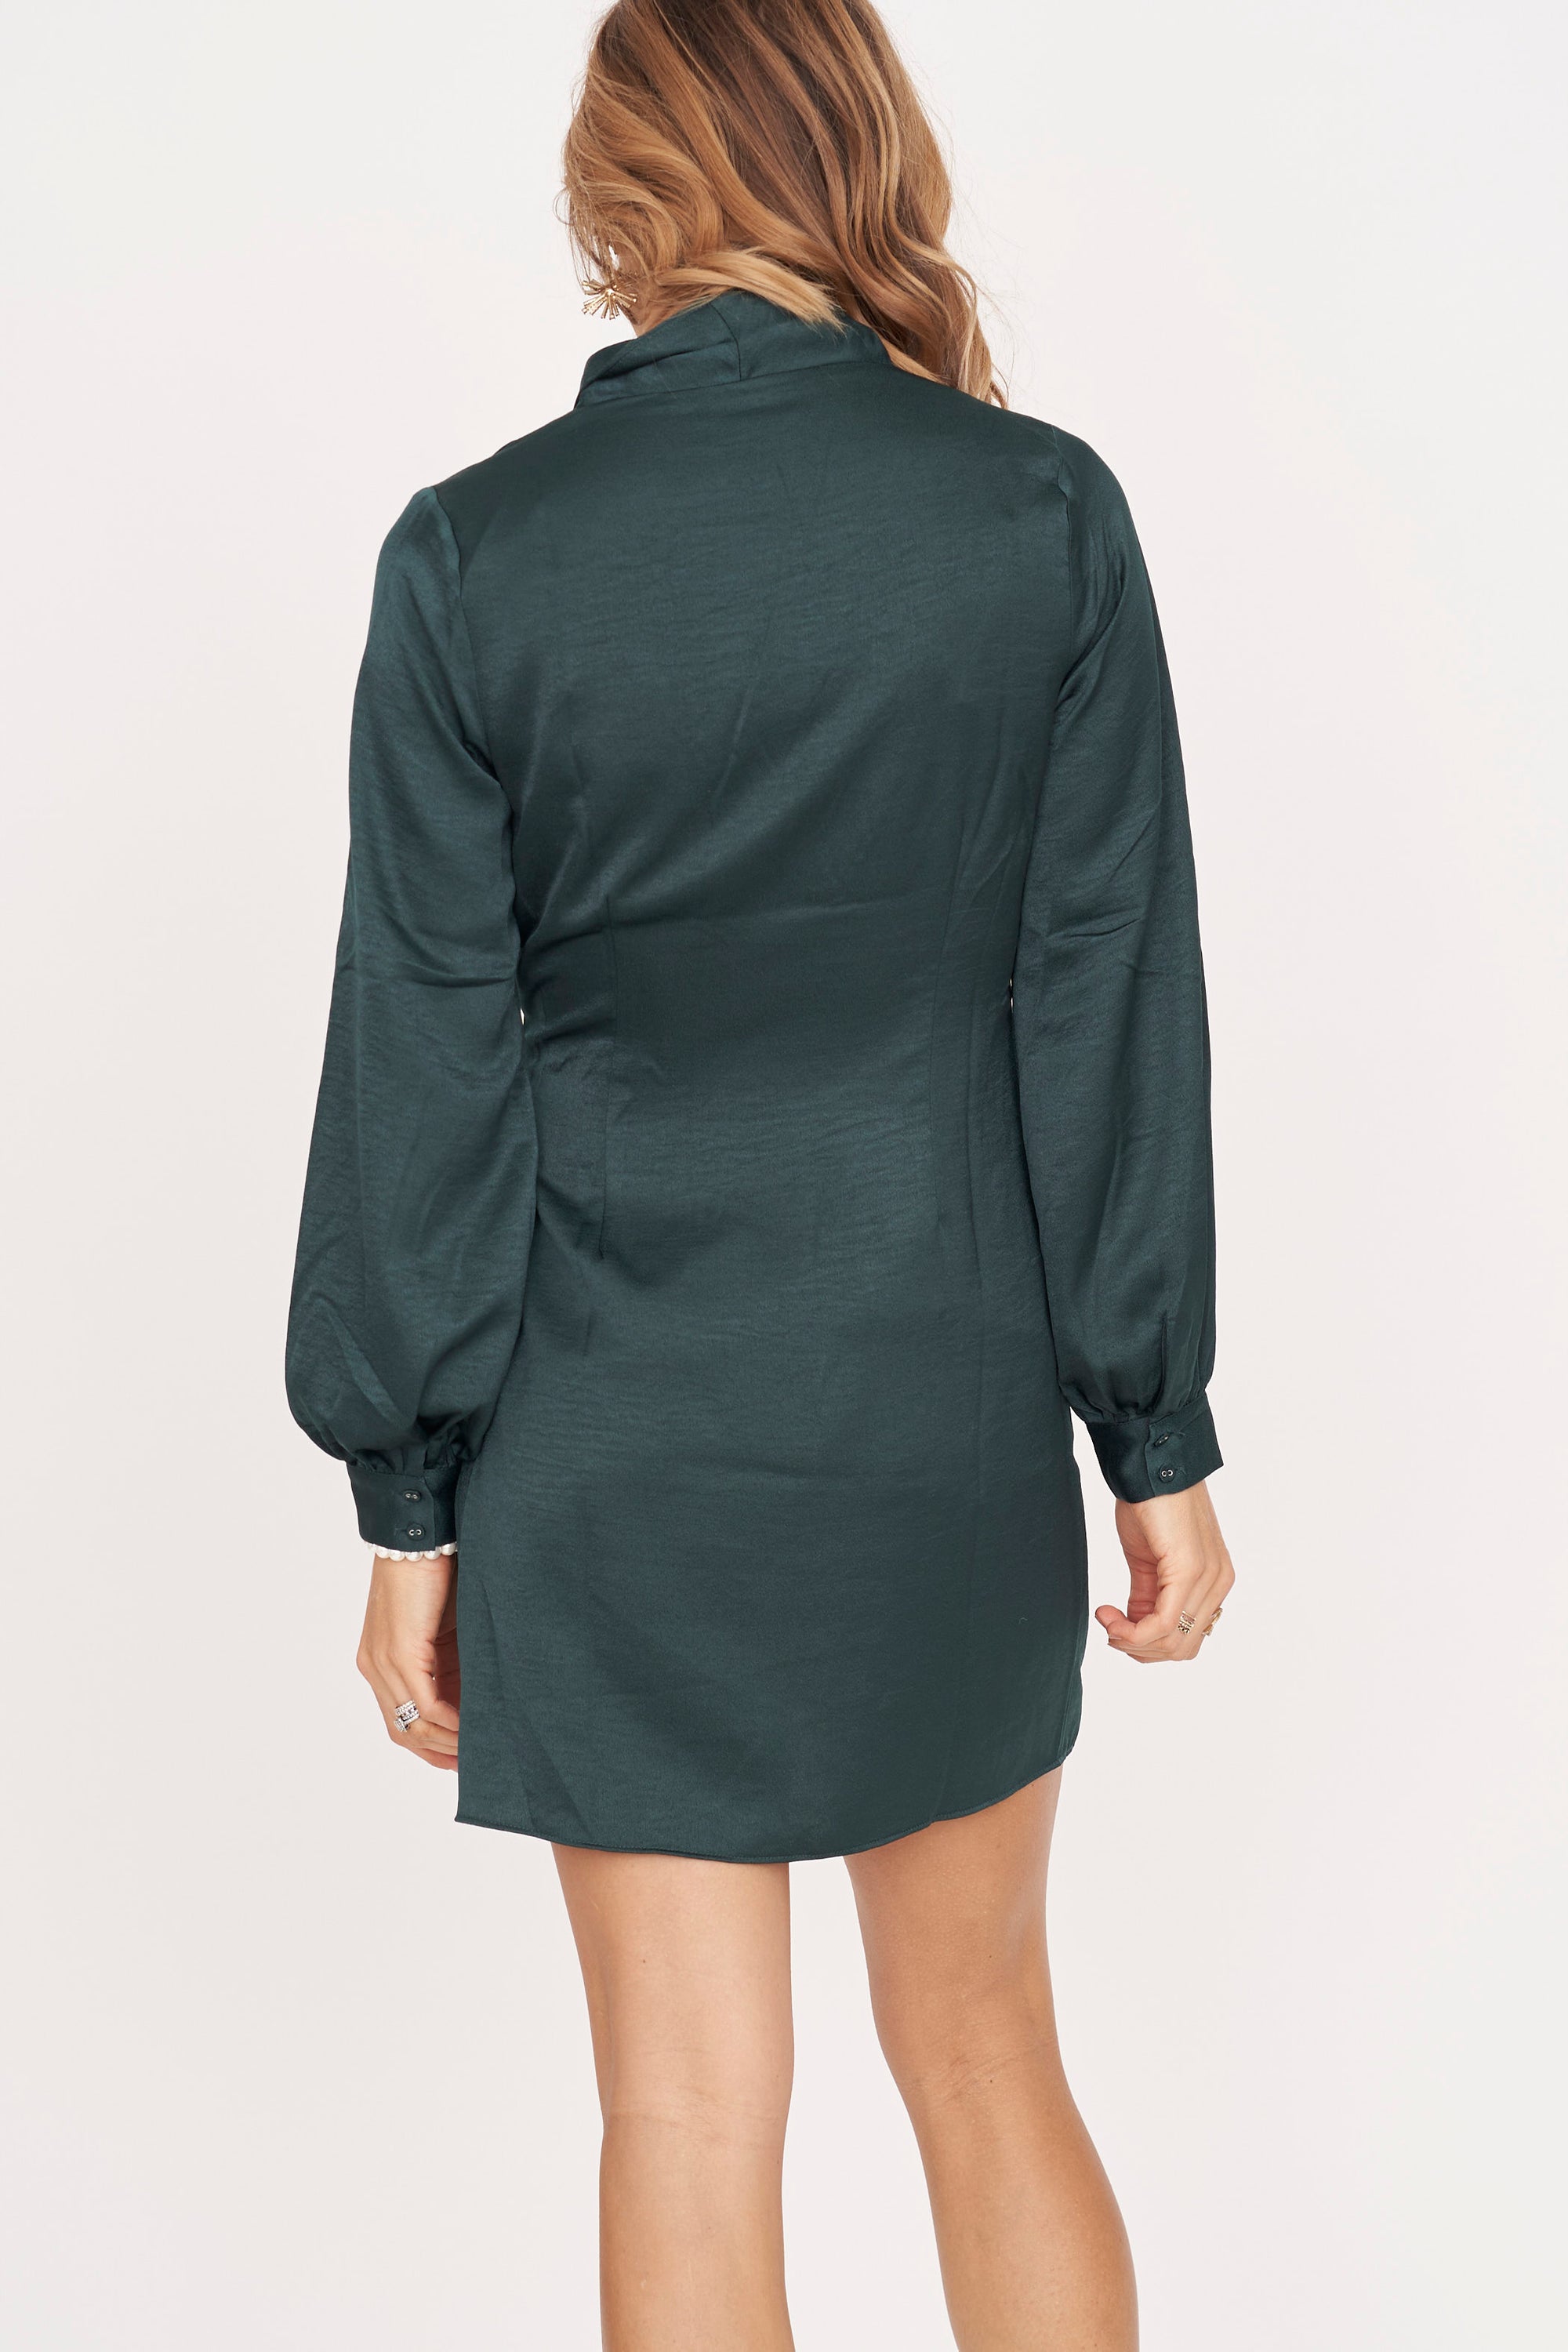 Calla Green Wrap Mini Dress